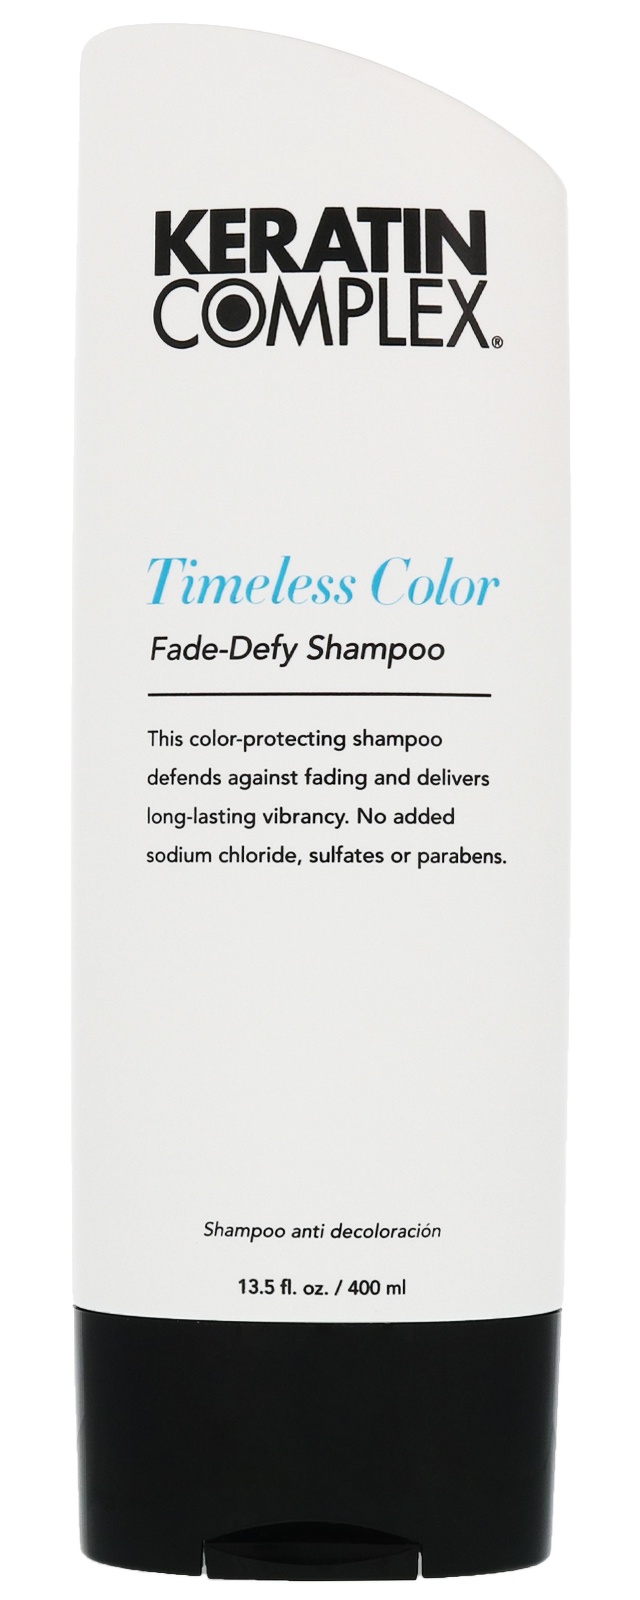 Keratin Complex Timeless Color Fade-defy Shampoo